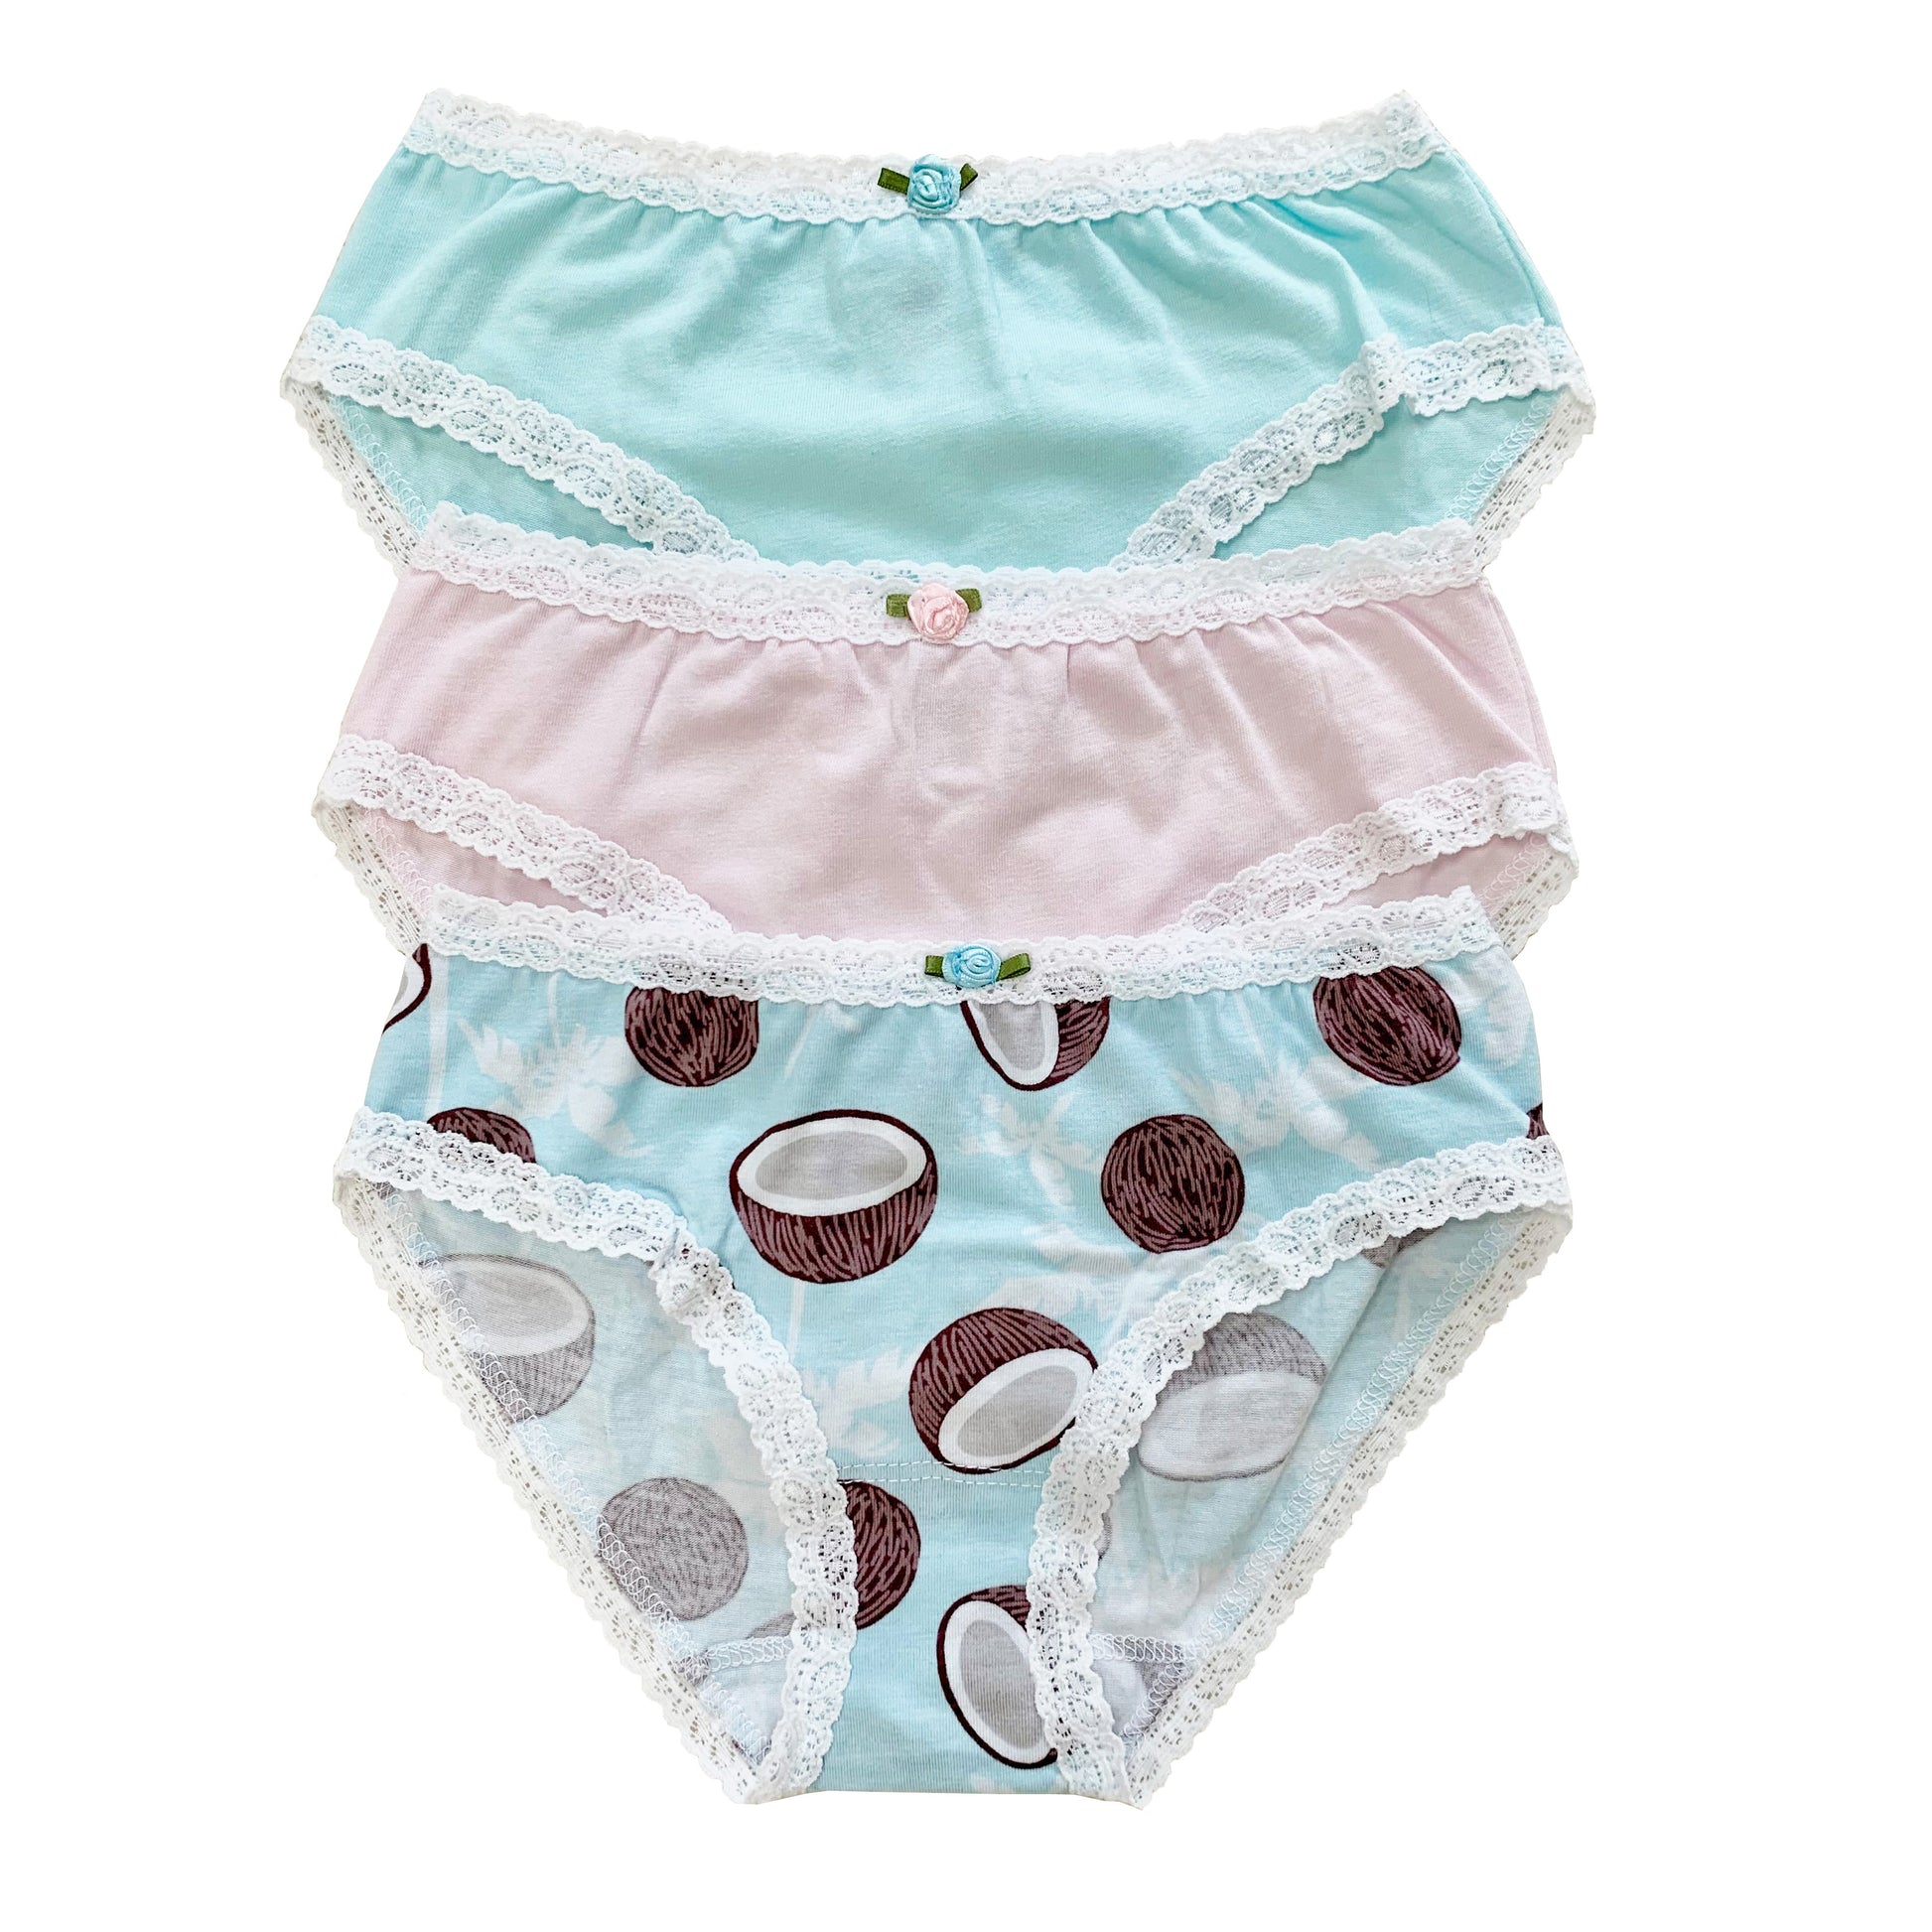 U20 Esme Girl's 3-Pack Panty on Sale Clearance – DoReMiFa-esme